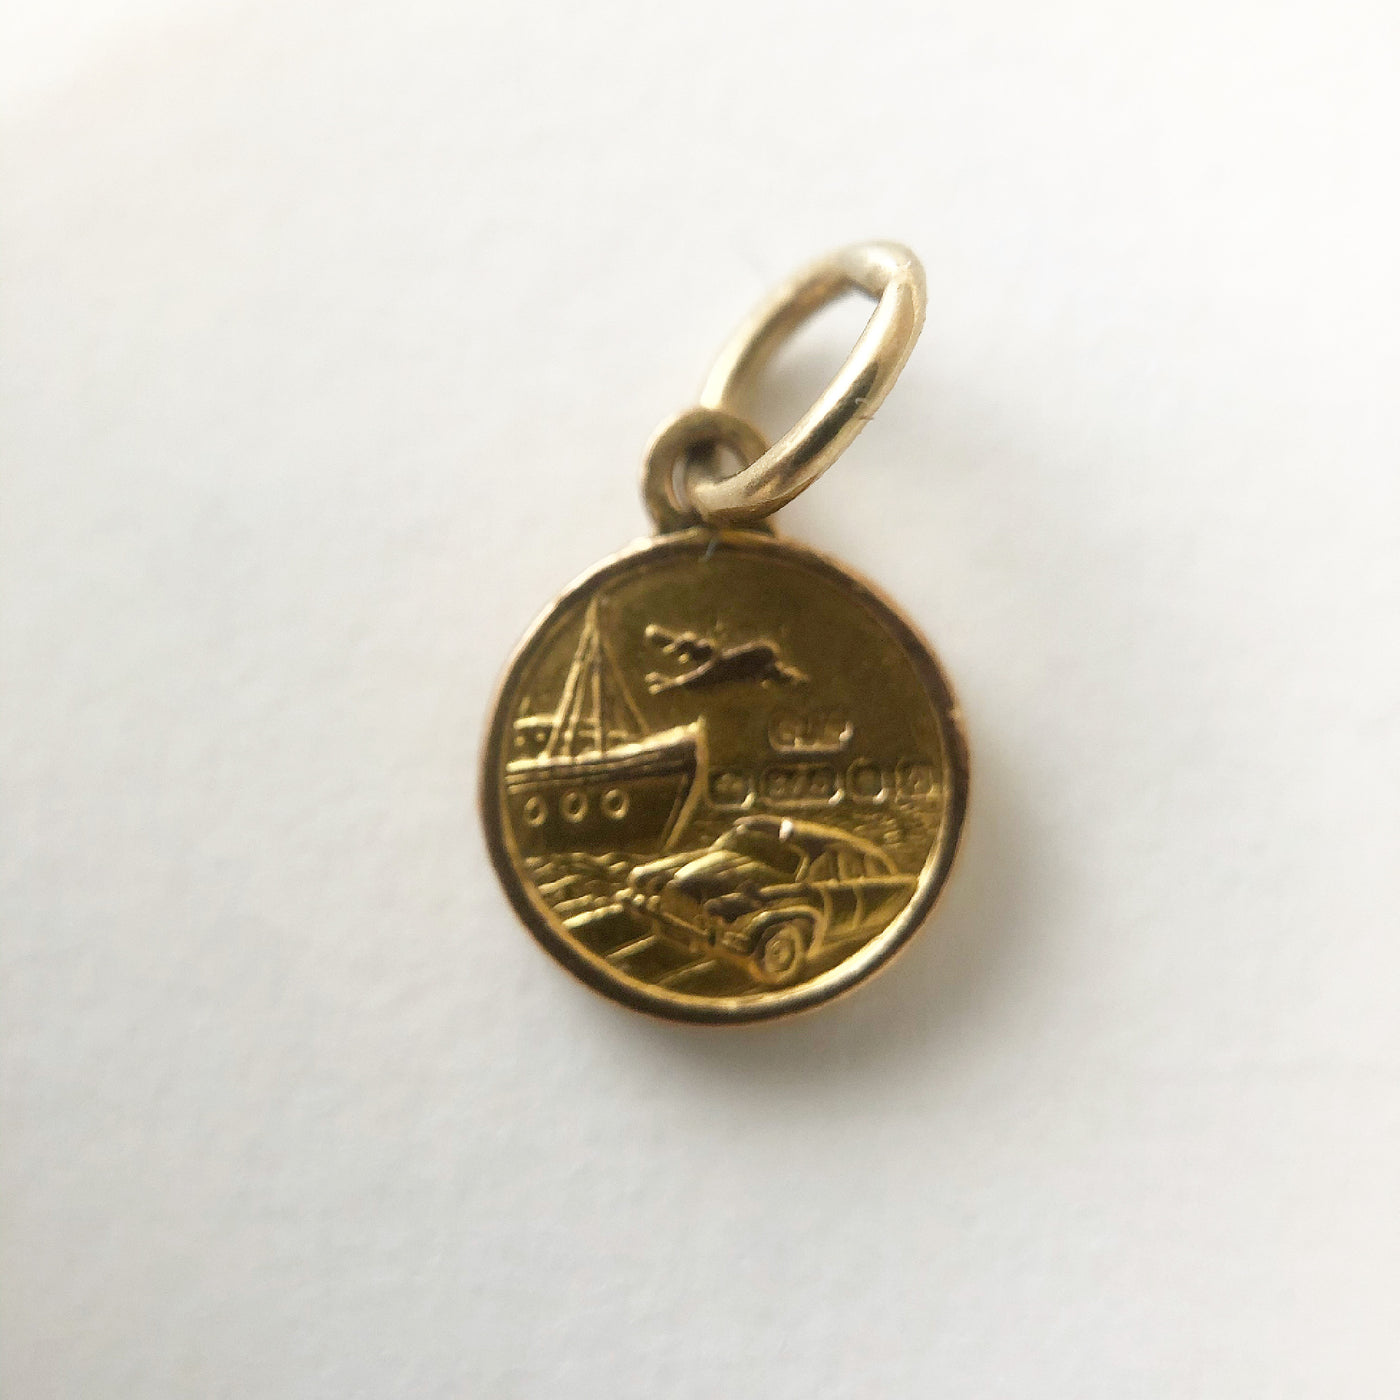 'Cece' 9ct Teeny Tiny Vintage Gold St Christopher Charm